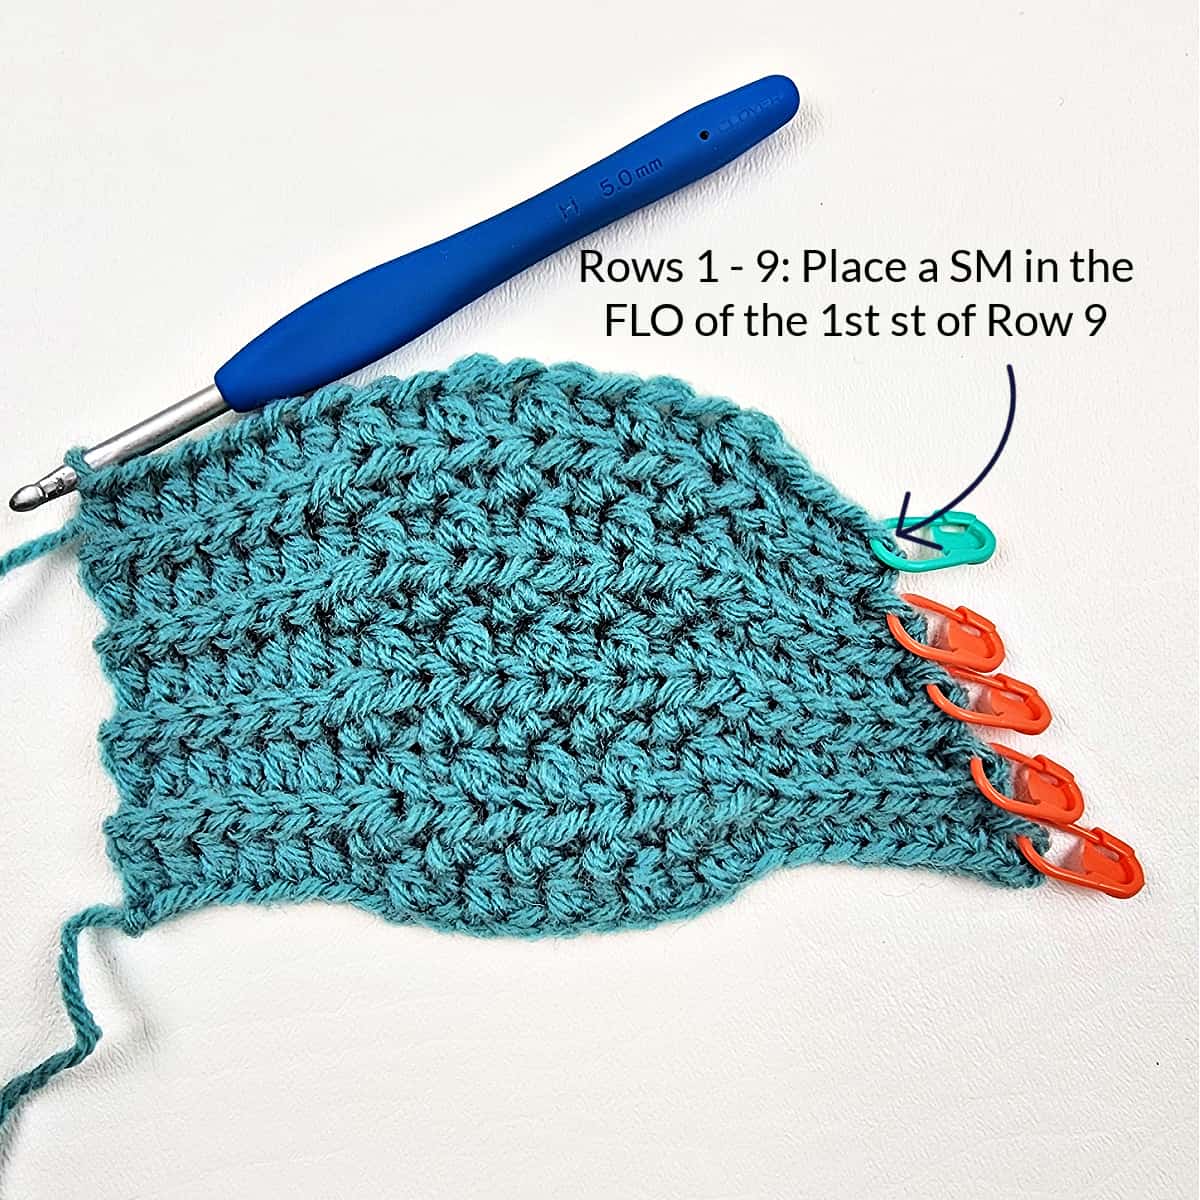 Easy Short Row Crochet Hat Pattern - A Crocheted Simplicity